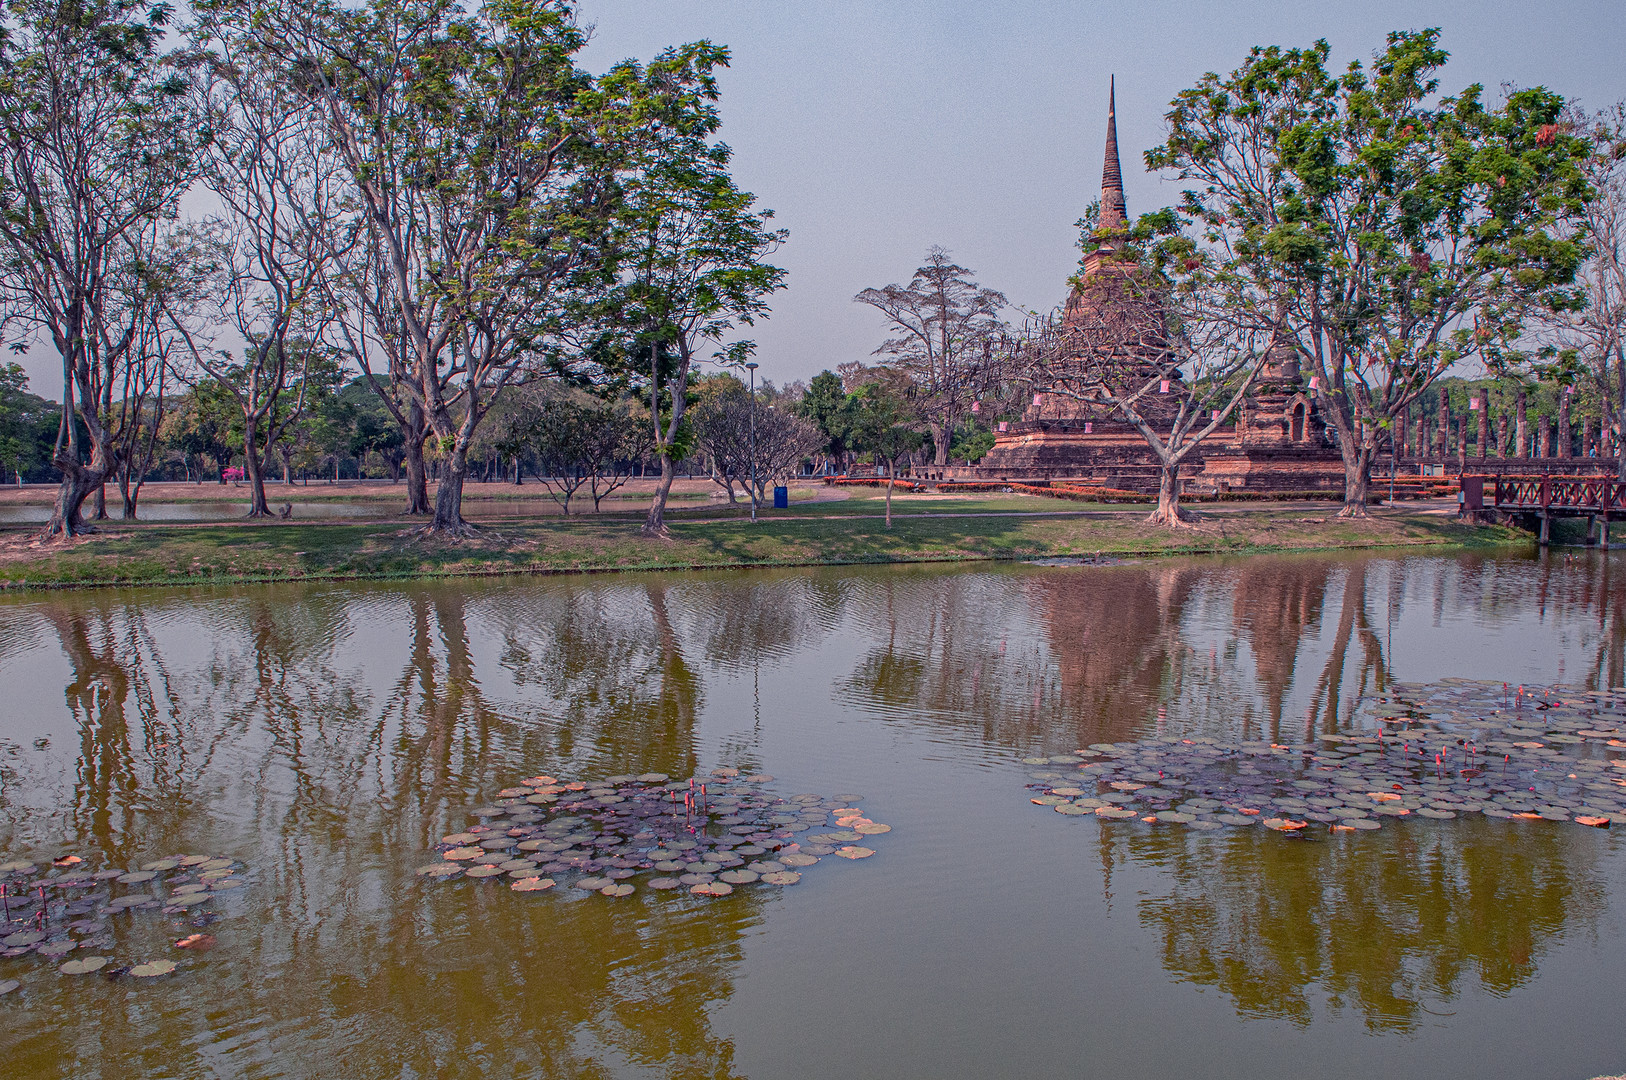 Inside the traditional Sukhothai Nationalpark